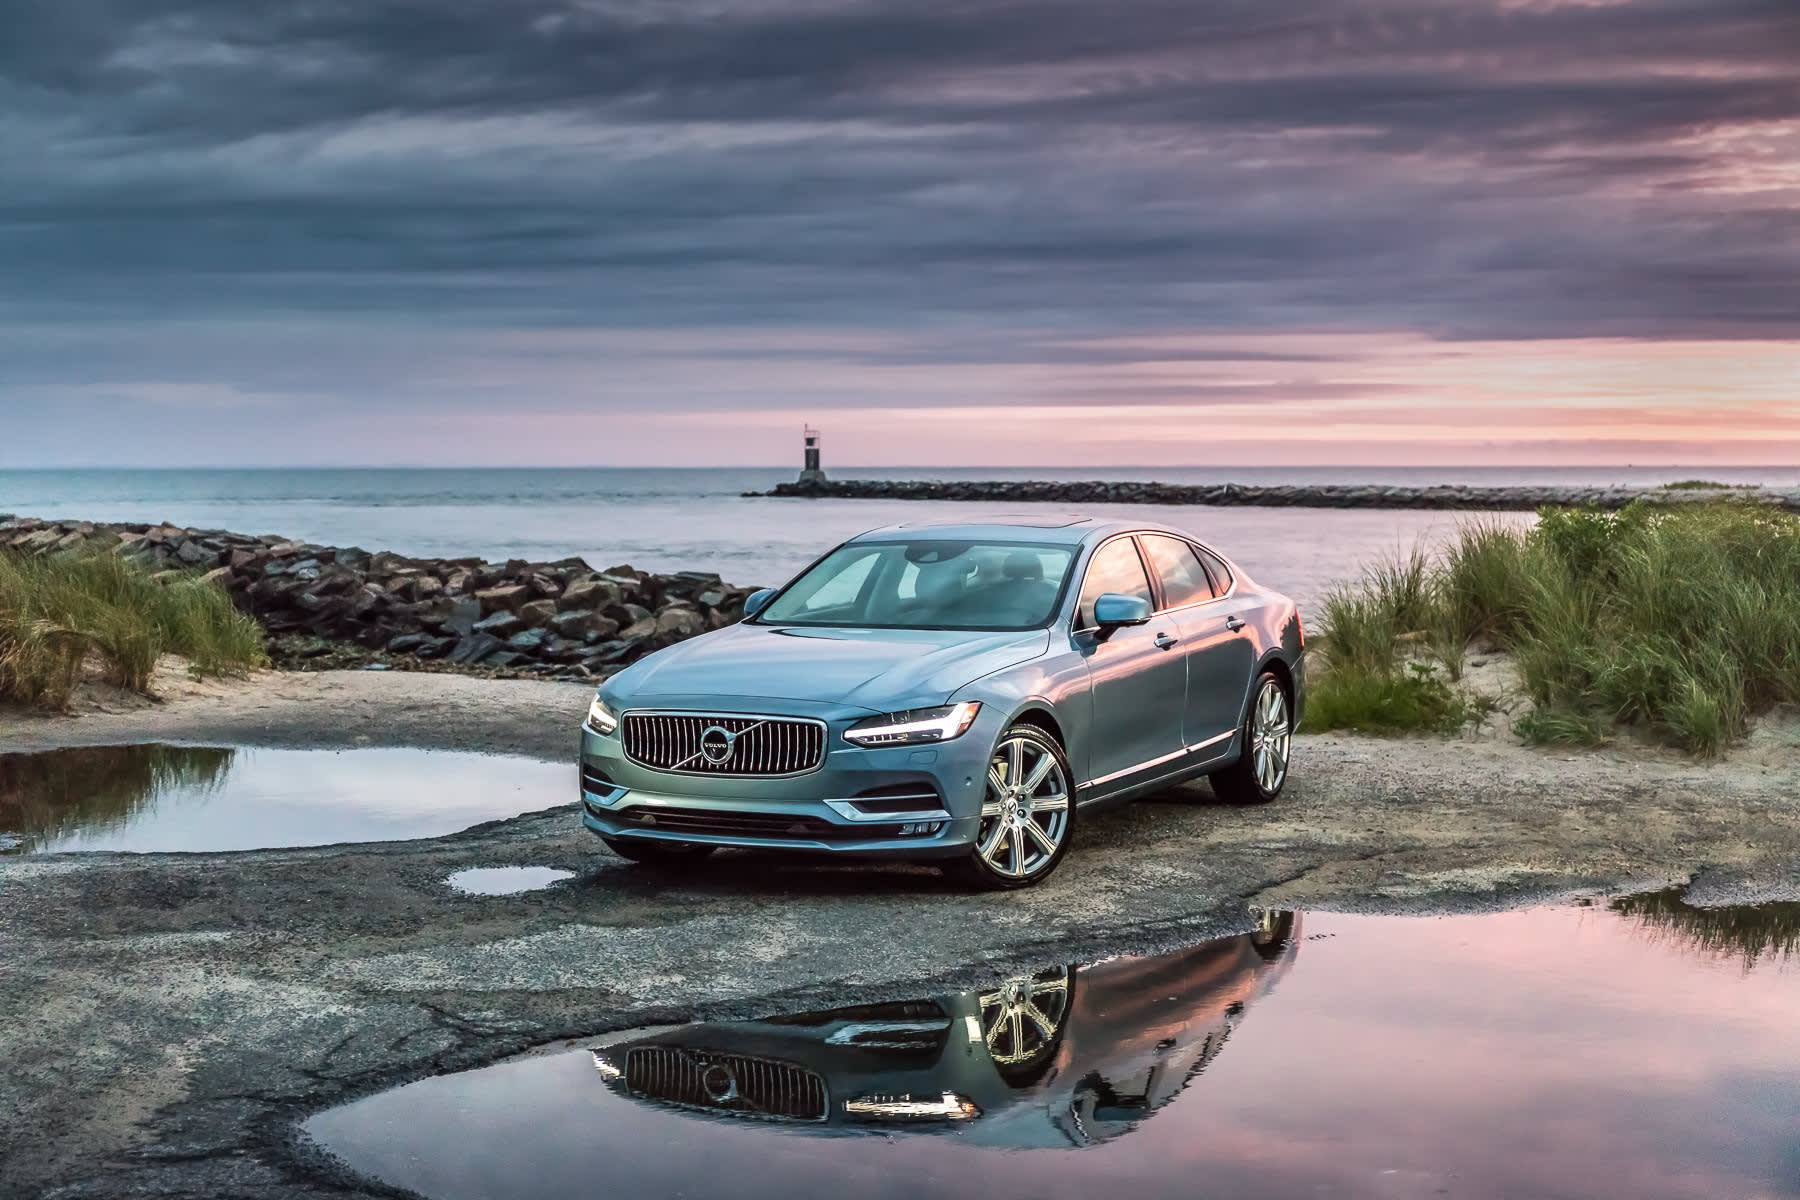 2017 Volvo S90 review, a high-tech luxury sedan